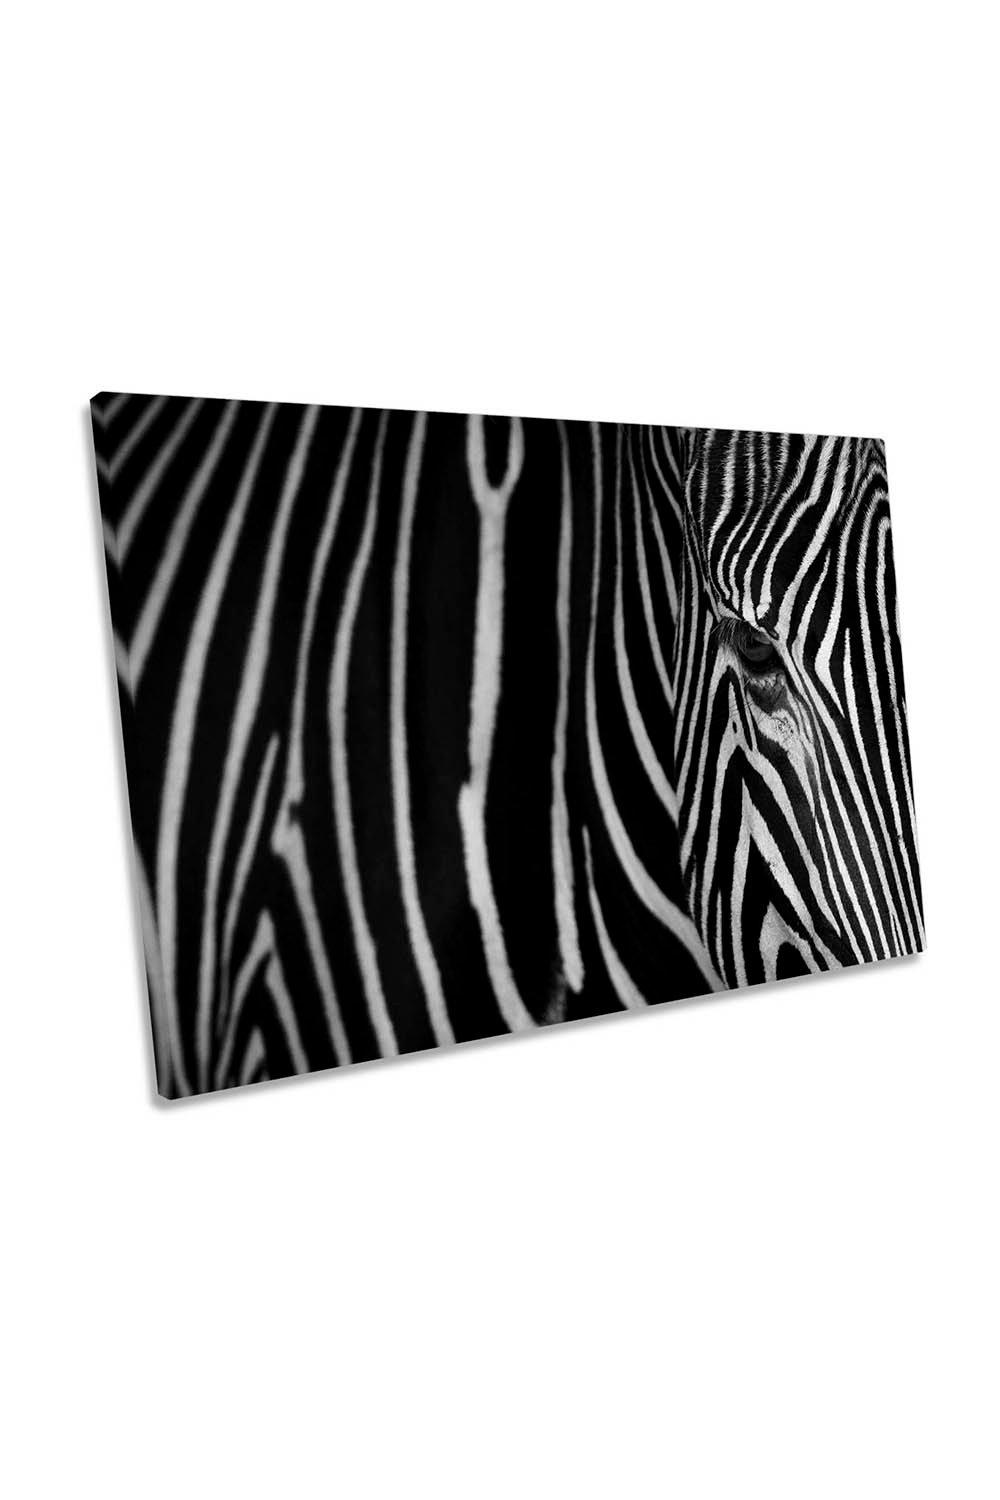 Zebra Stripes Animal Canvas Wall Art Picture Print